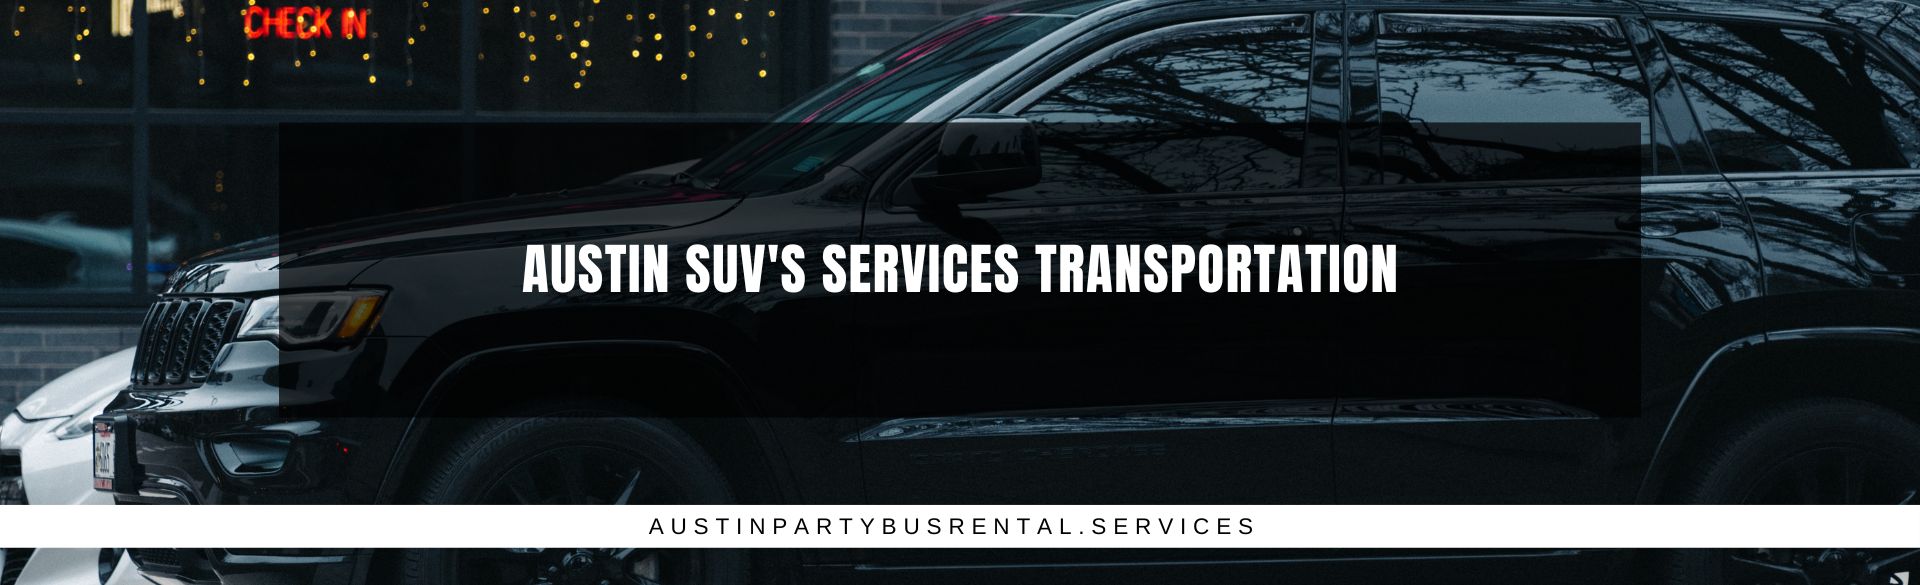 Austin Suv's Services Transportation